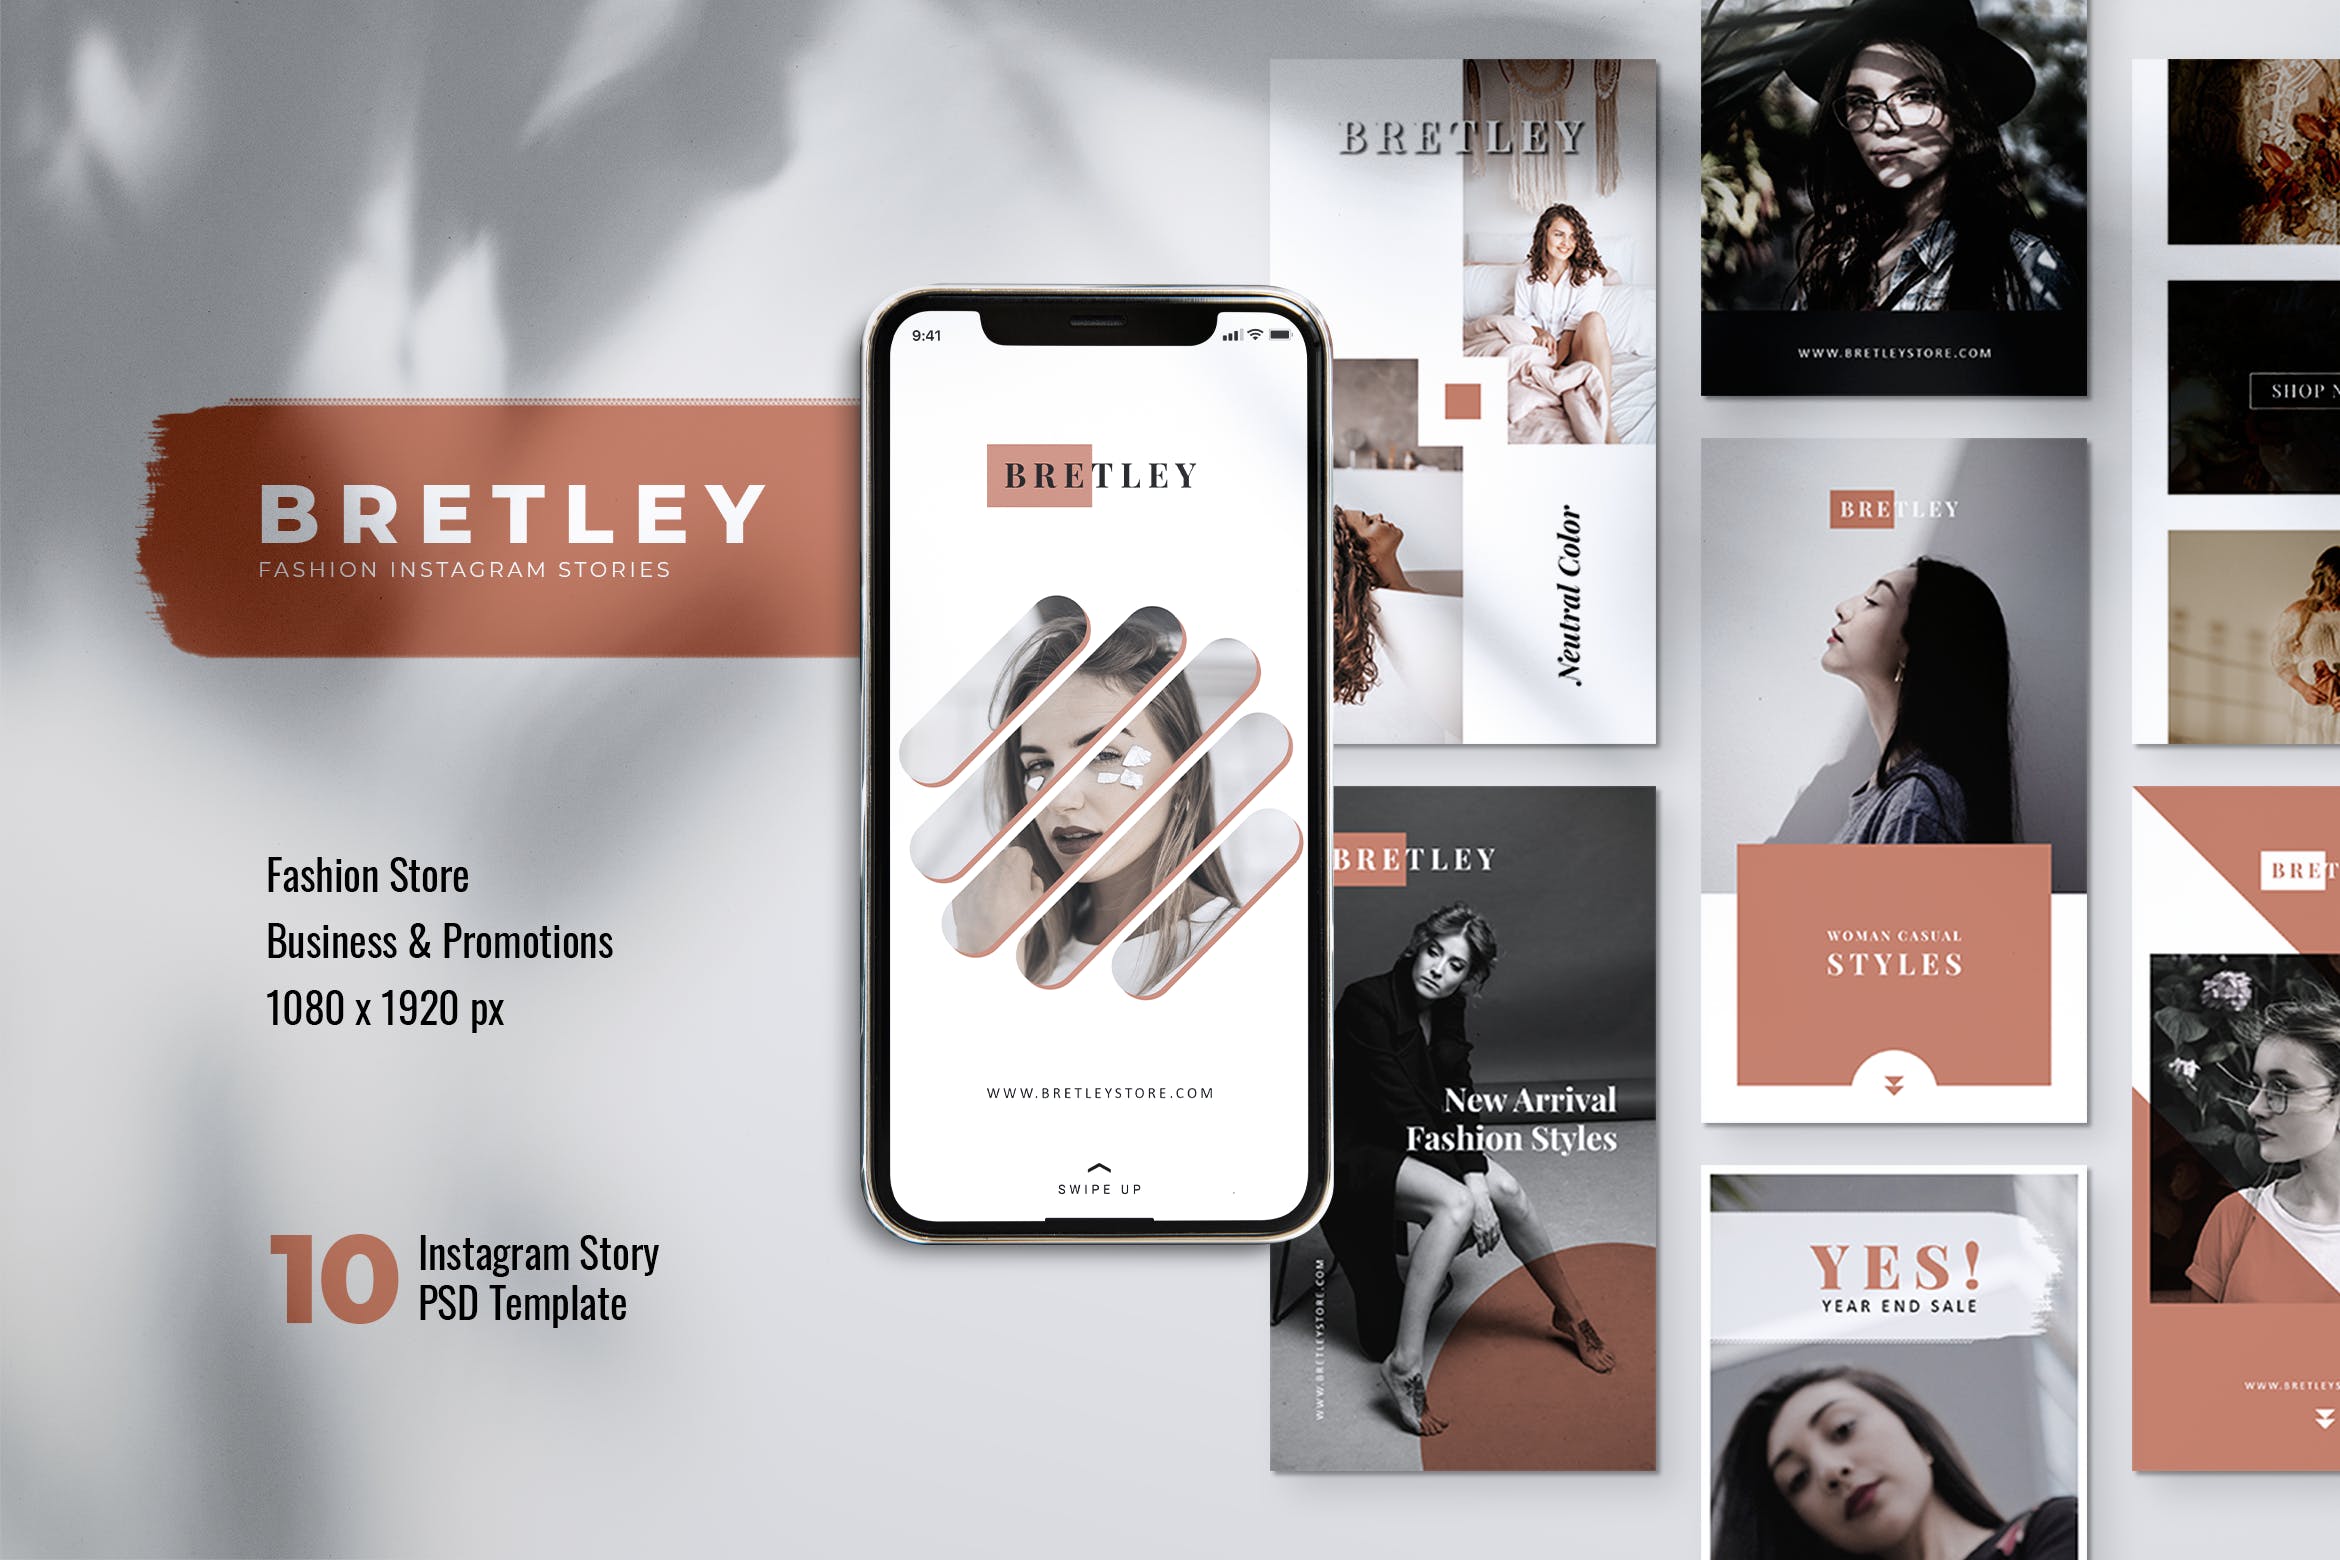 10款Instagram社交平台品牌故事设计模板素材库精选 BRETLEY Fashion Store Instagram Stories插图